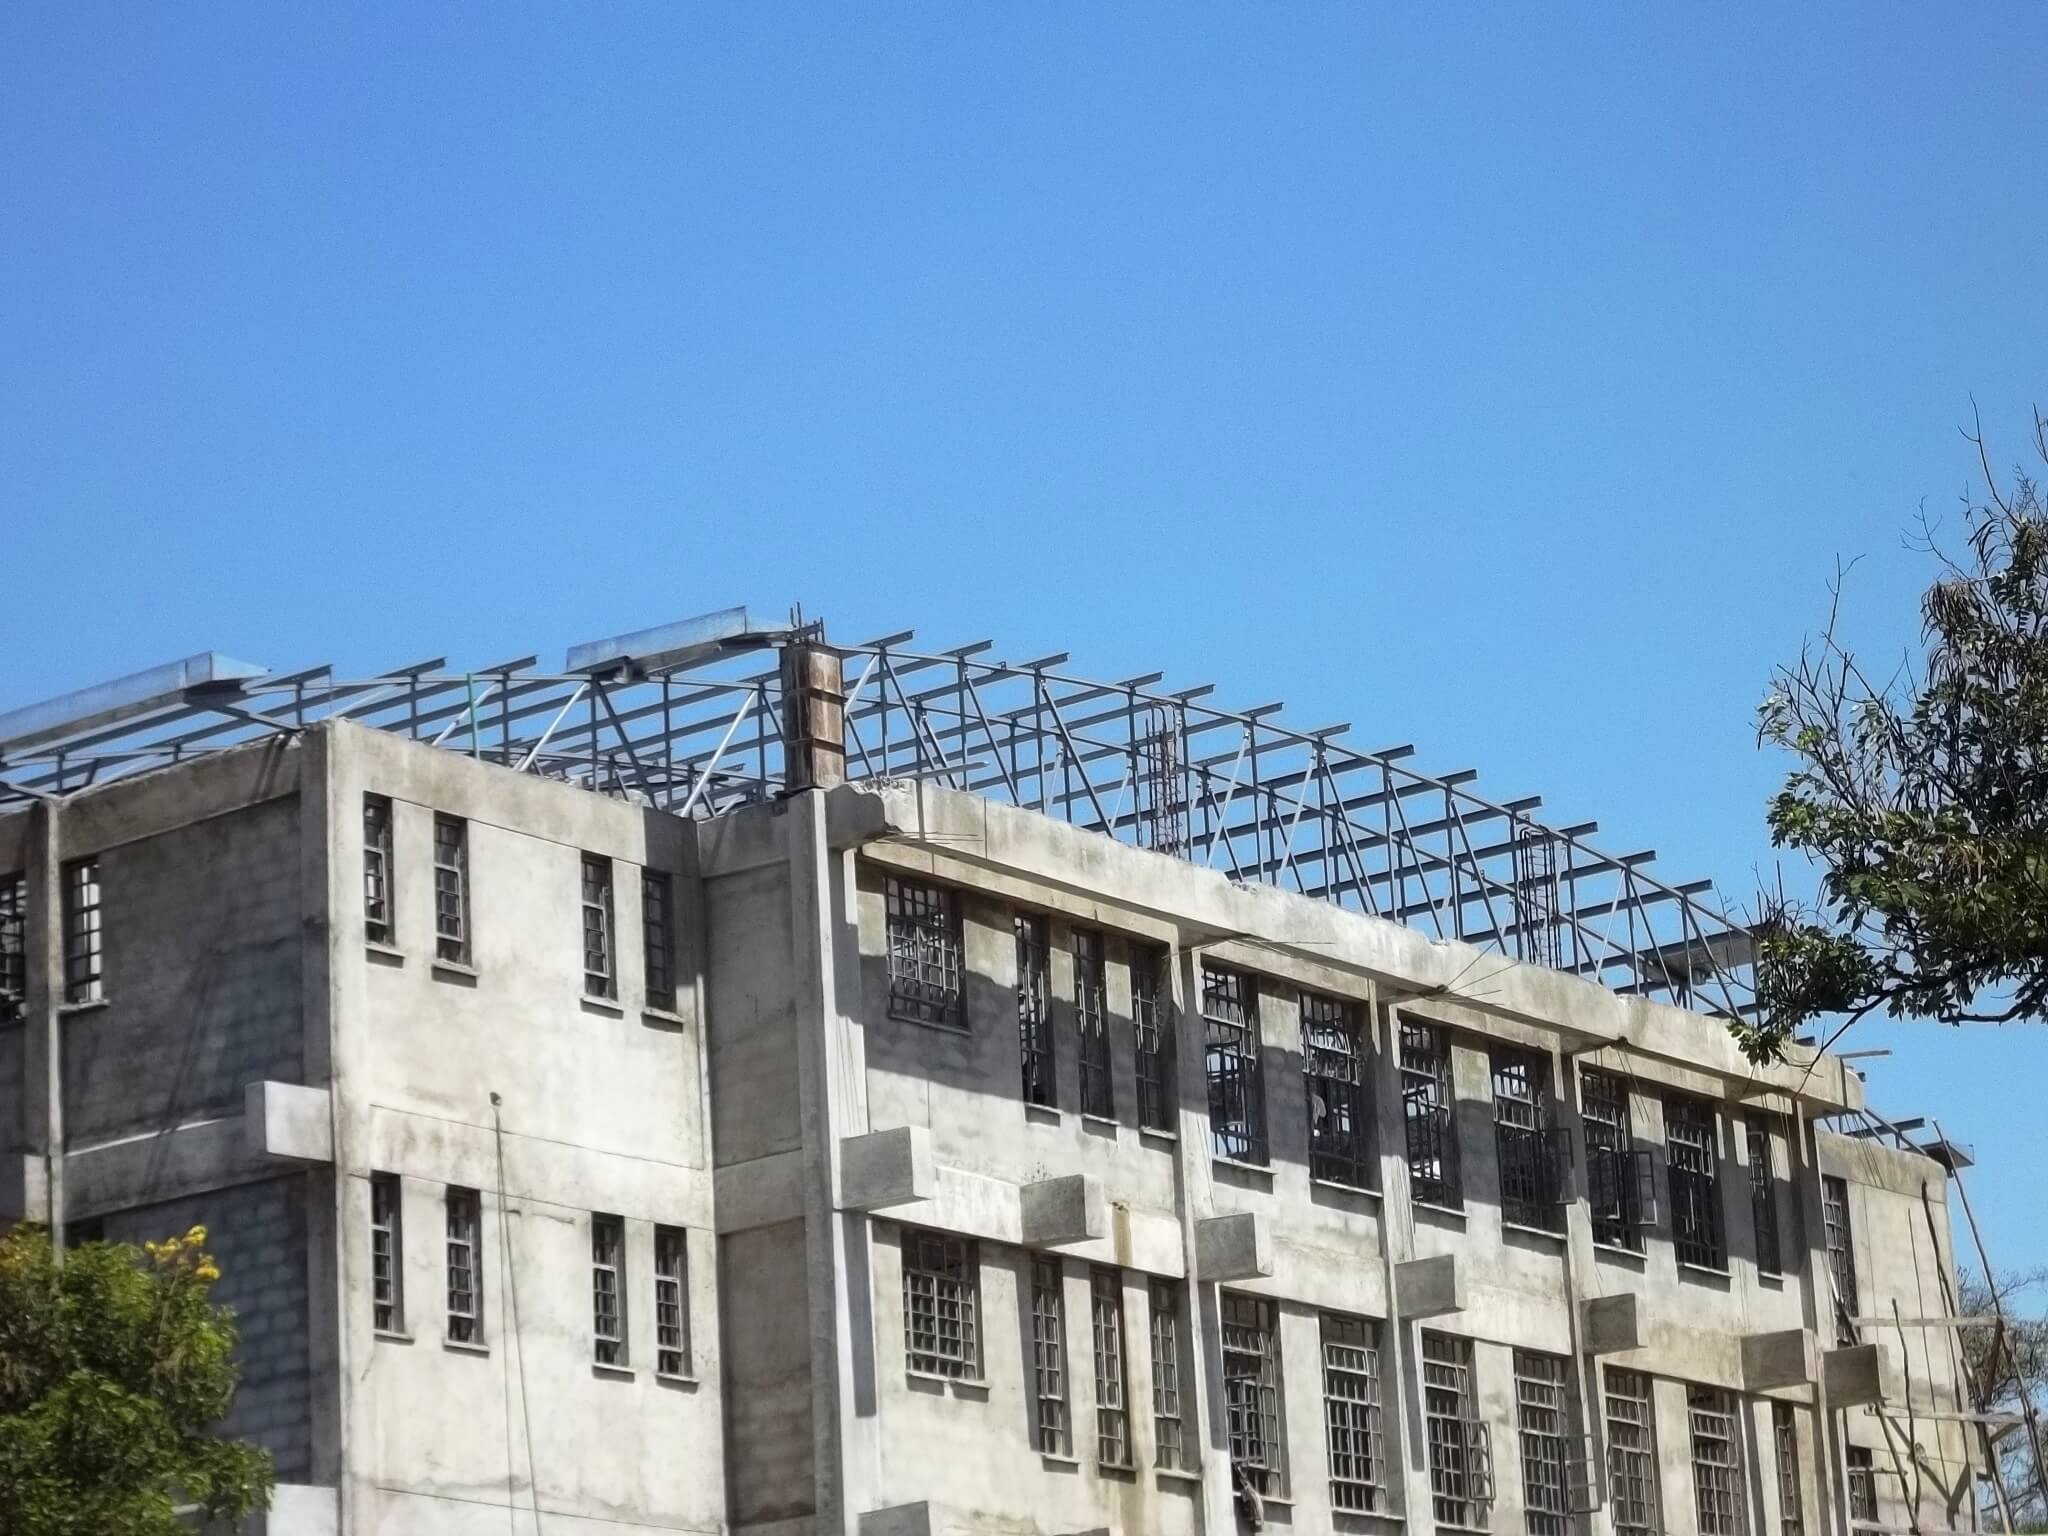 SSS4256 - 2013 - Roof over Commercial Law Courts Building,Kisumu,Kenya